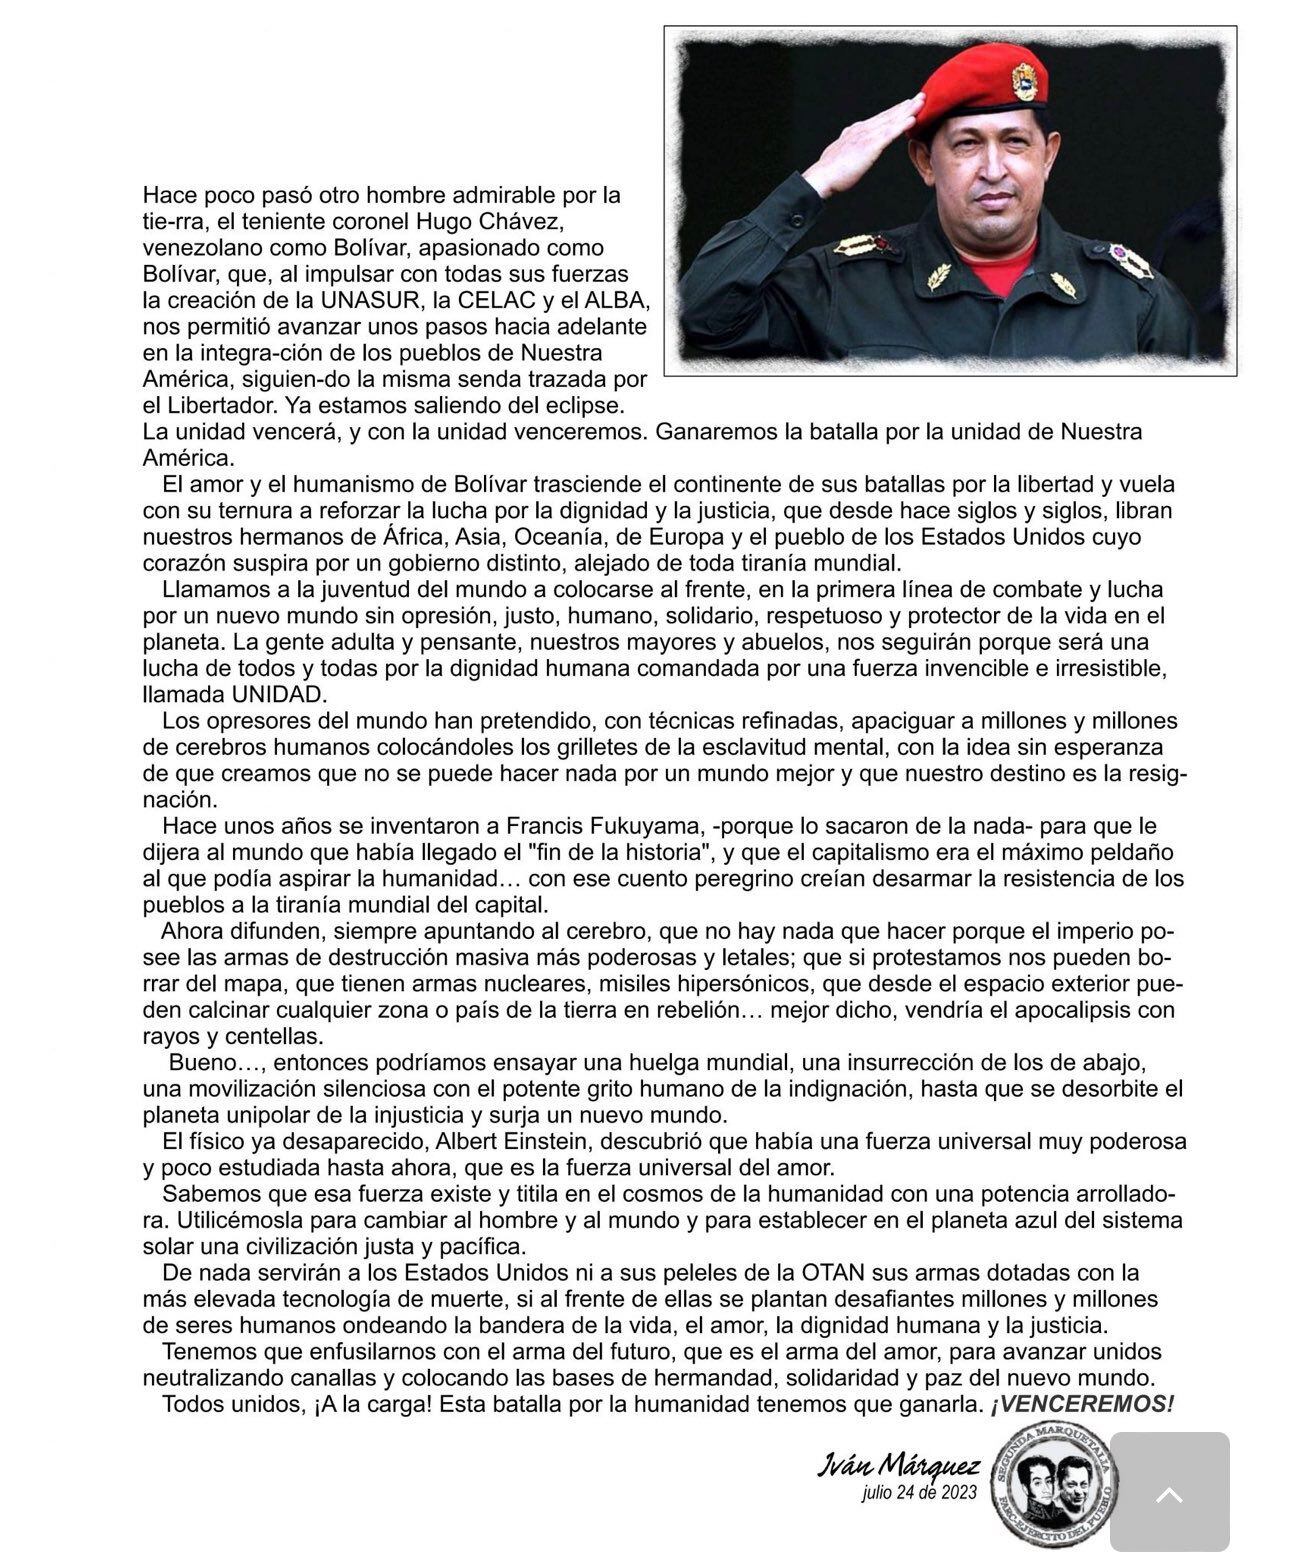 Documento difundido donde se pone en duda si Iván Márquez está vivo o no. Página 2.  Recuperado de: @ricarospina - Twitter